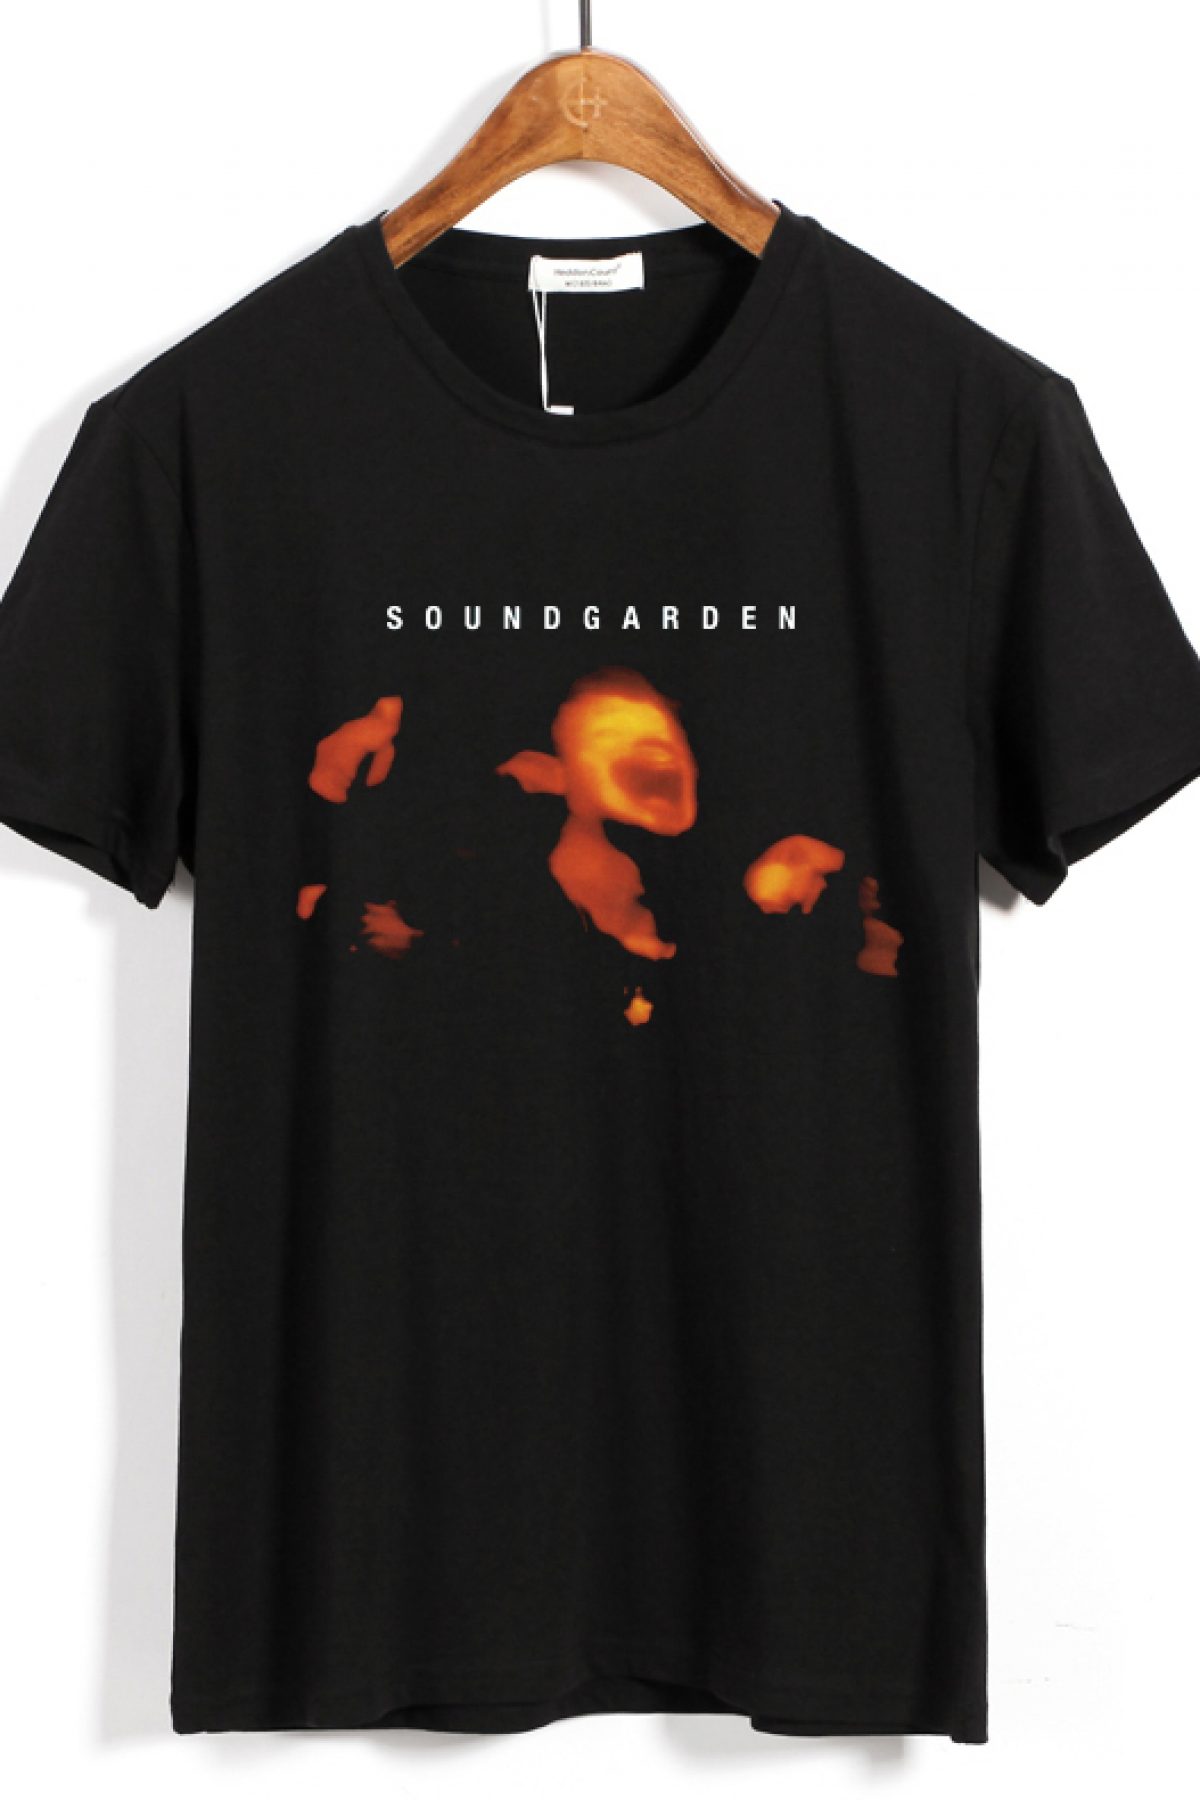 soundgarden shirt